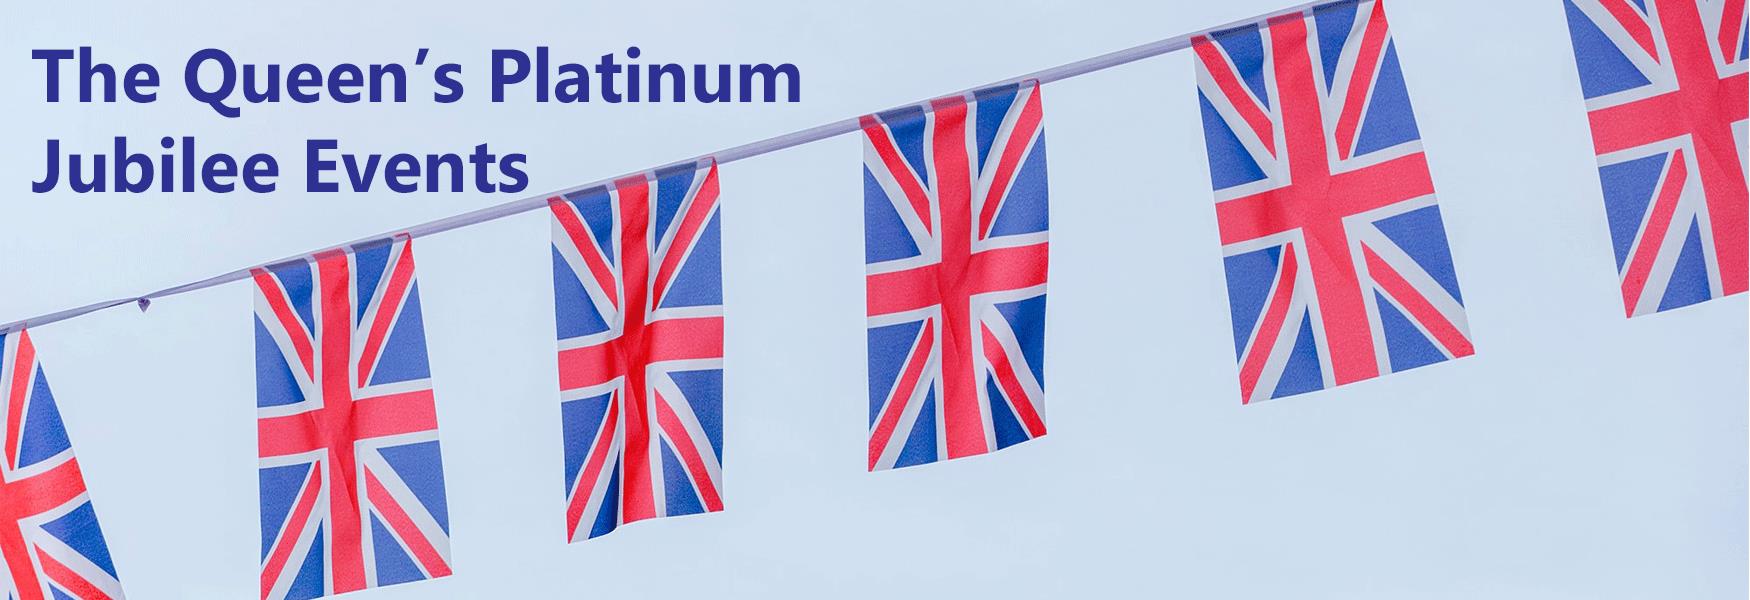 The Queen's Platinum Jubilee Events